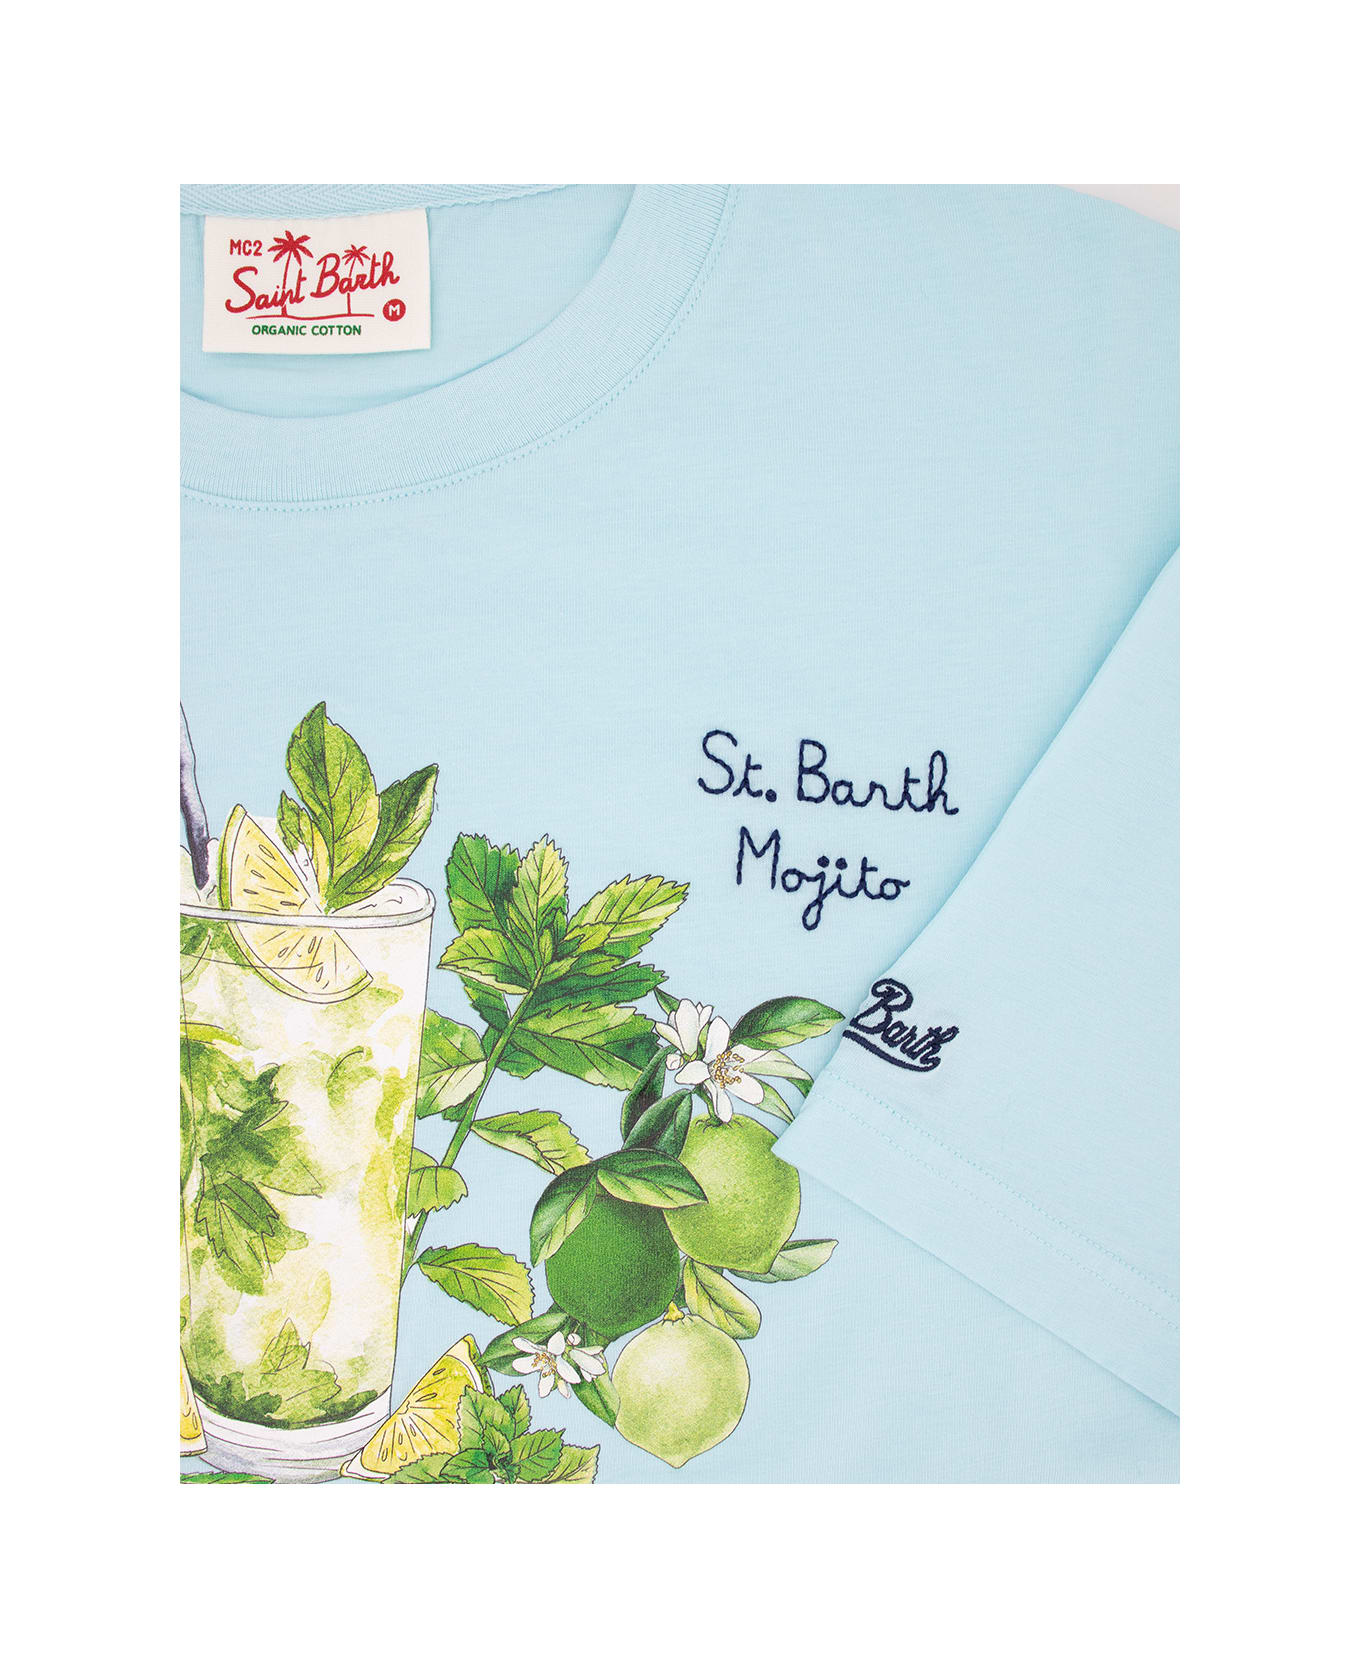 MC2 Saint Barth T-shirt - SBARTH MOJITO 56 EMB